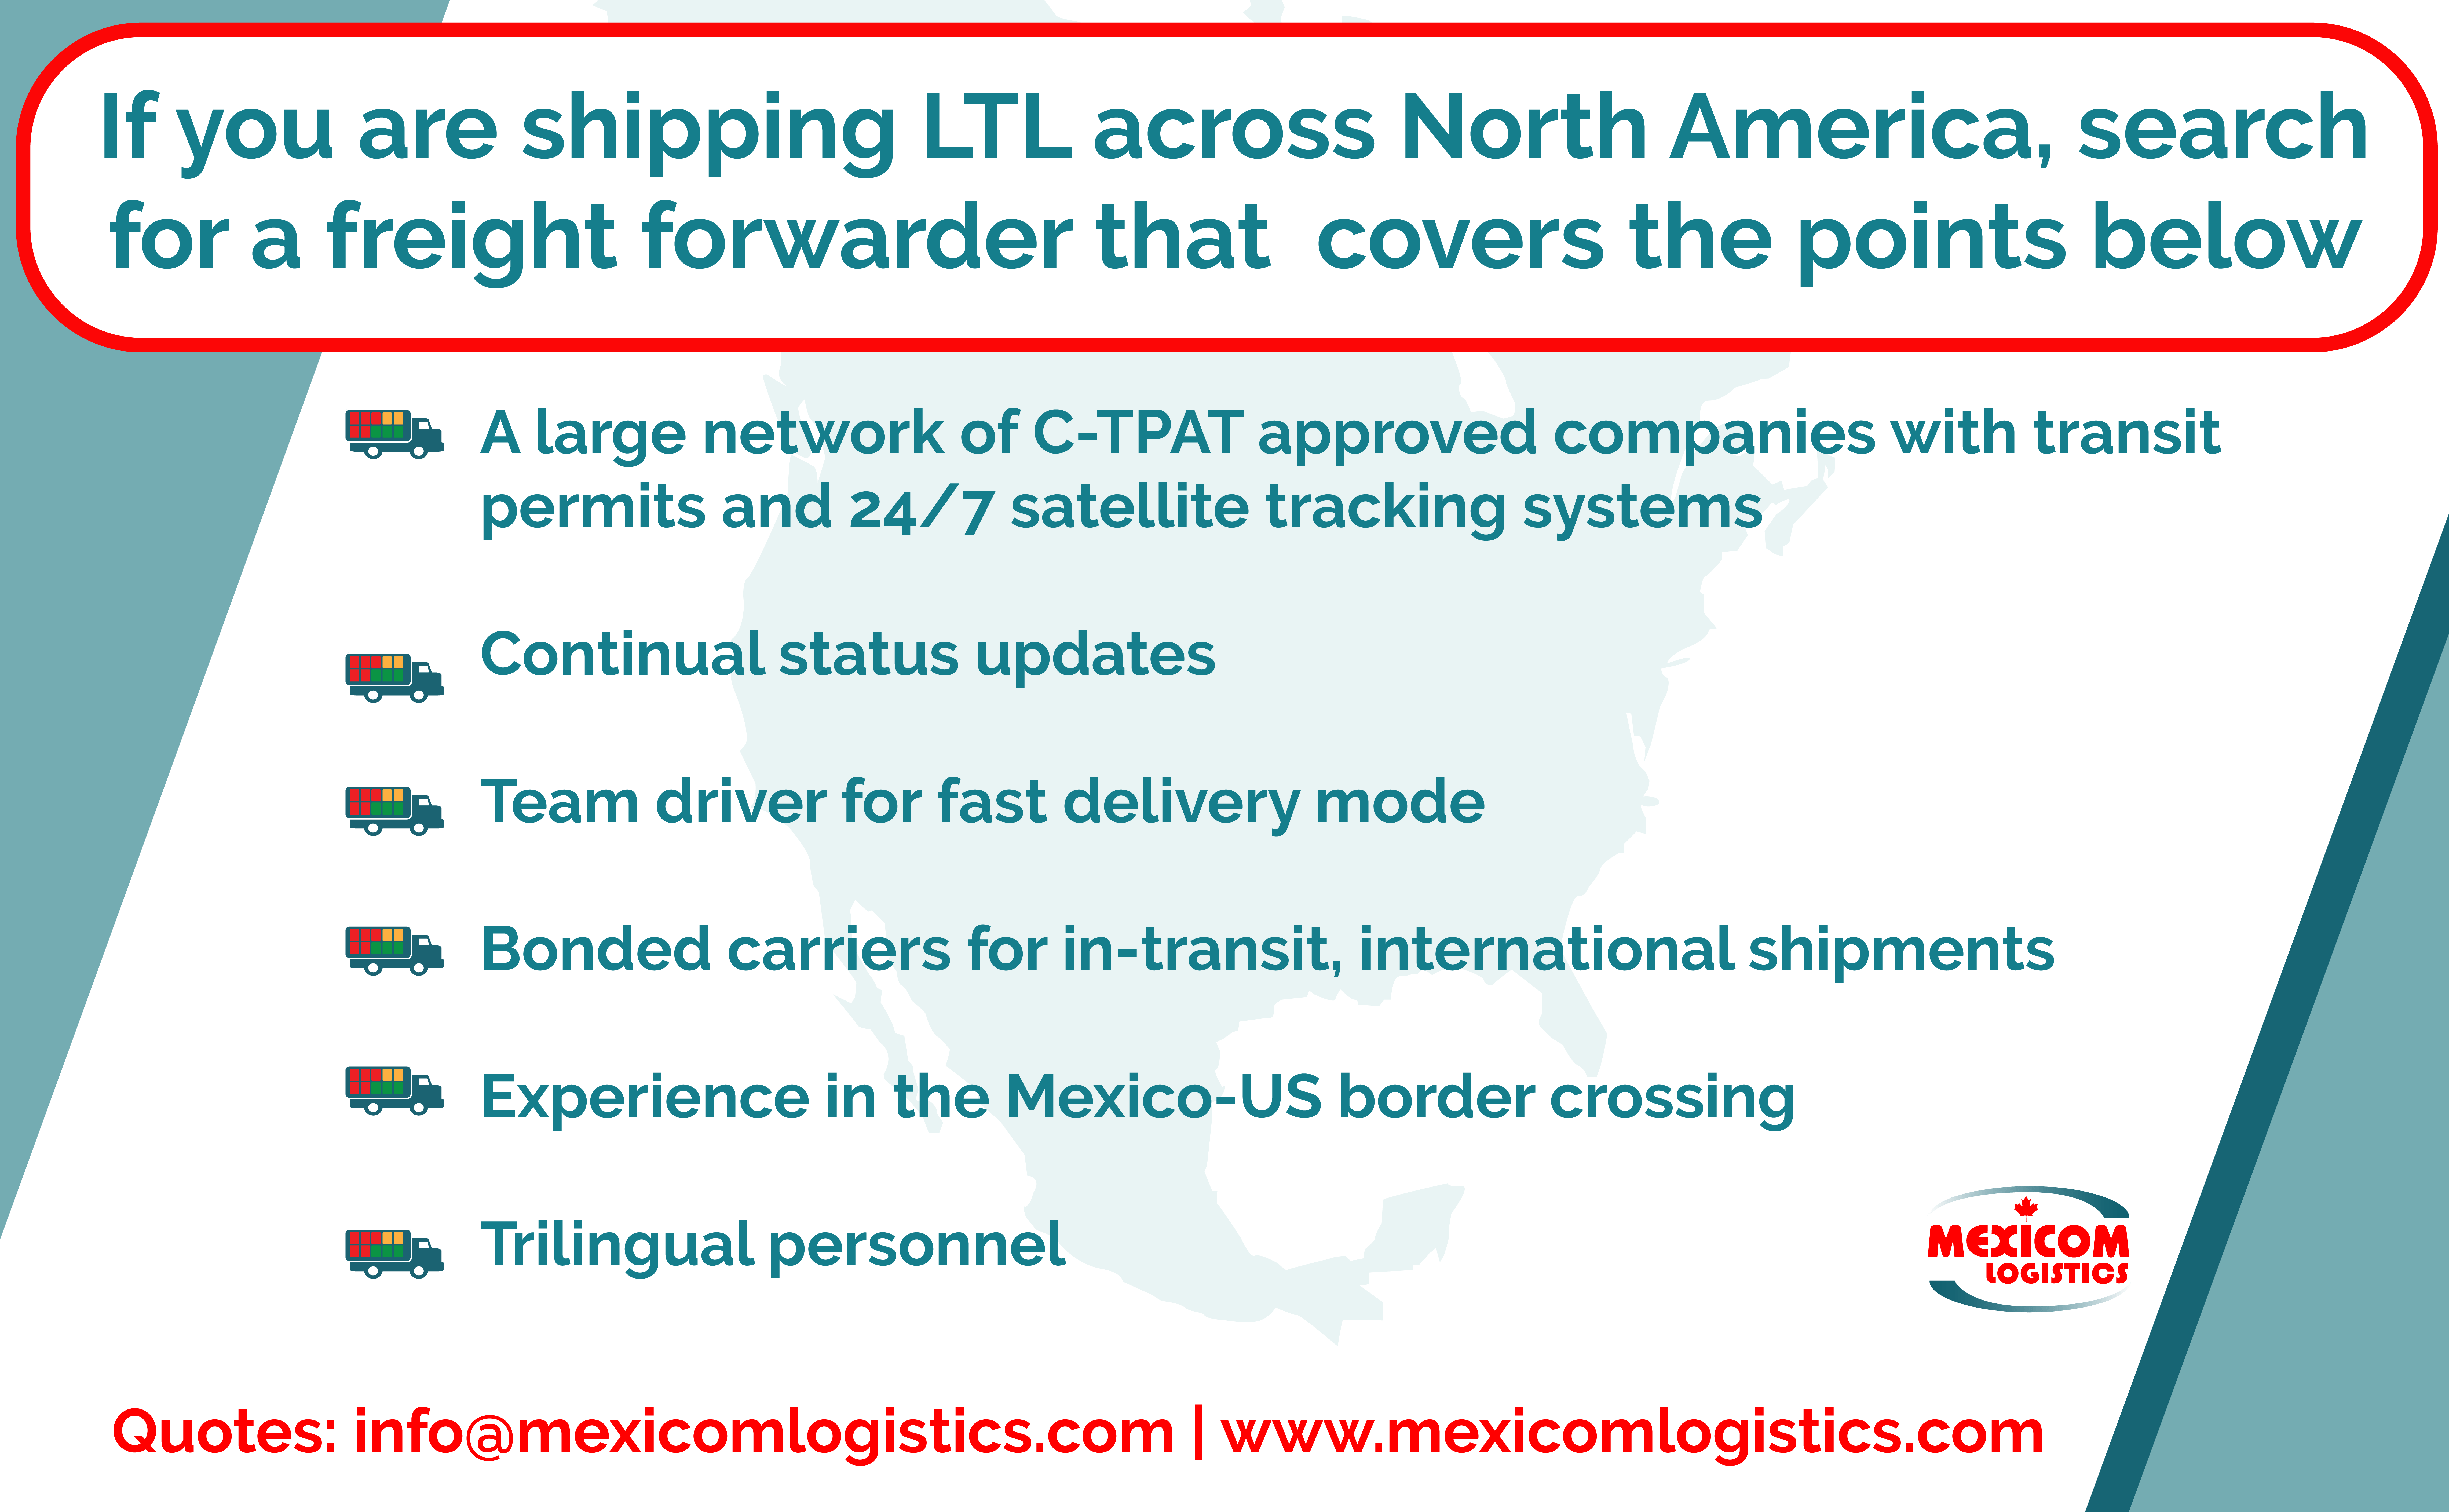 choosing a freight forwarder for LTL shipments in North America 